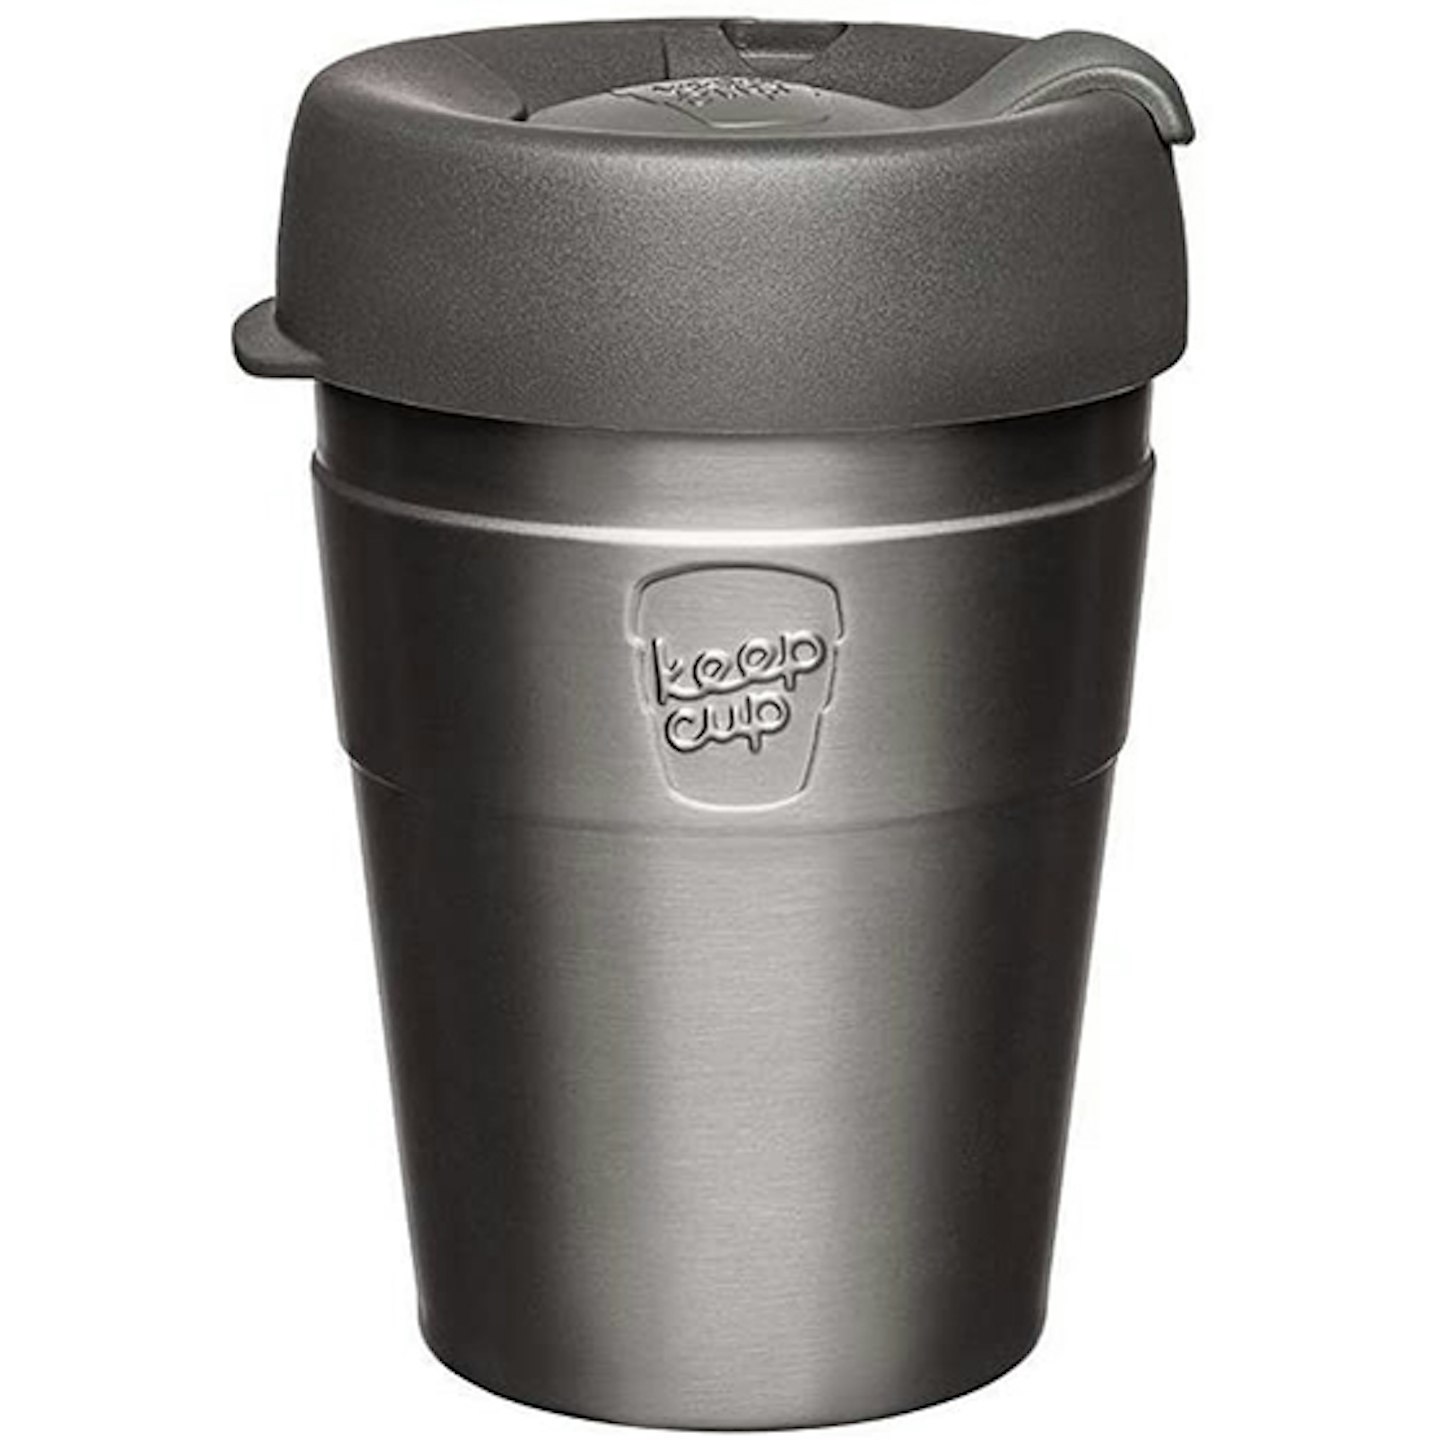 KeepCup reusable coffee cup